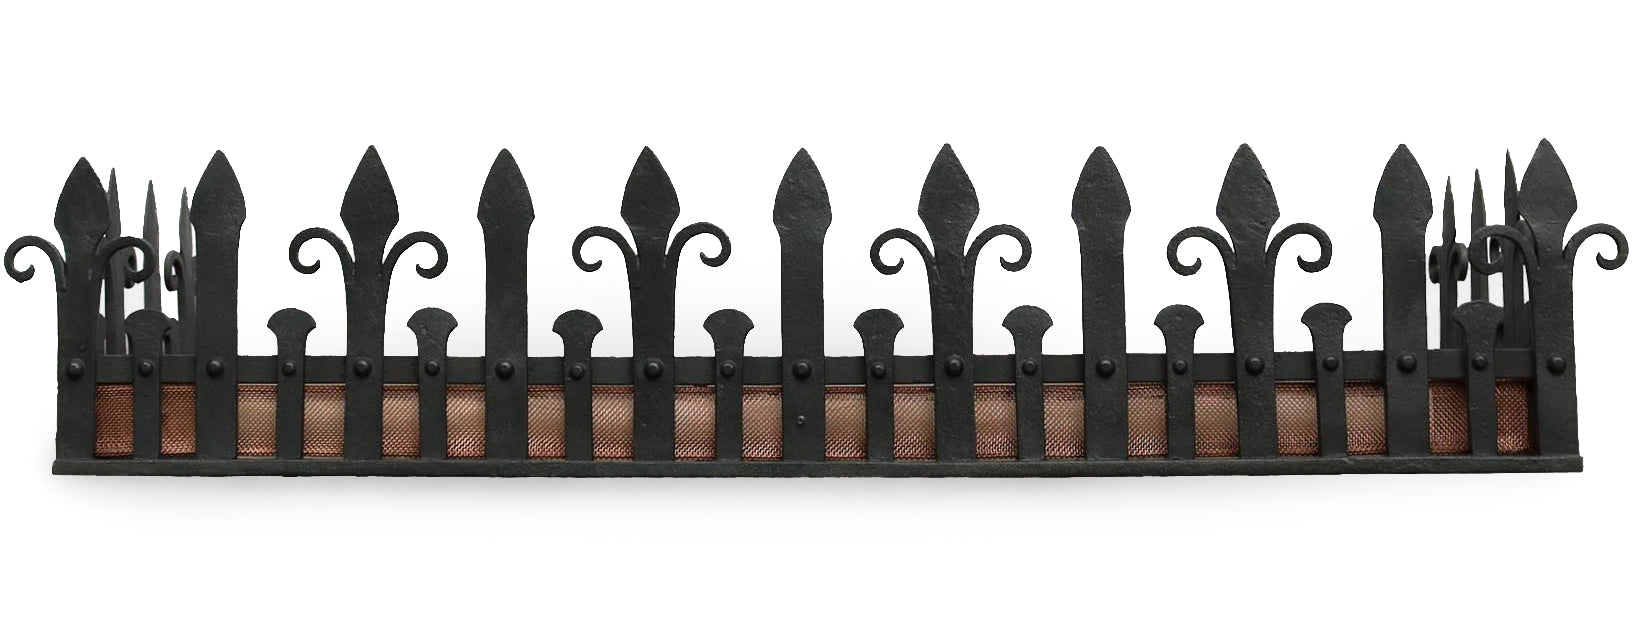 Edwardian Cast Iron Tiled Fireplace Inserts | Victorian Register Grates